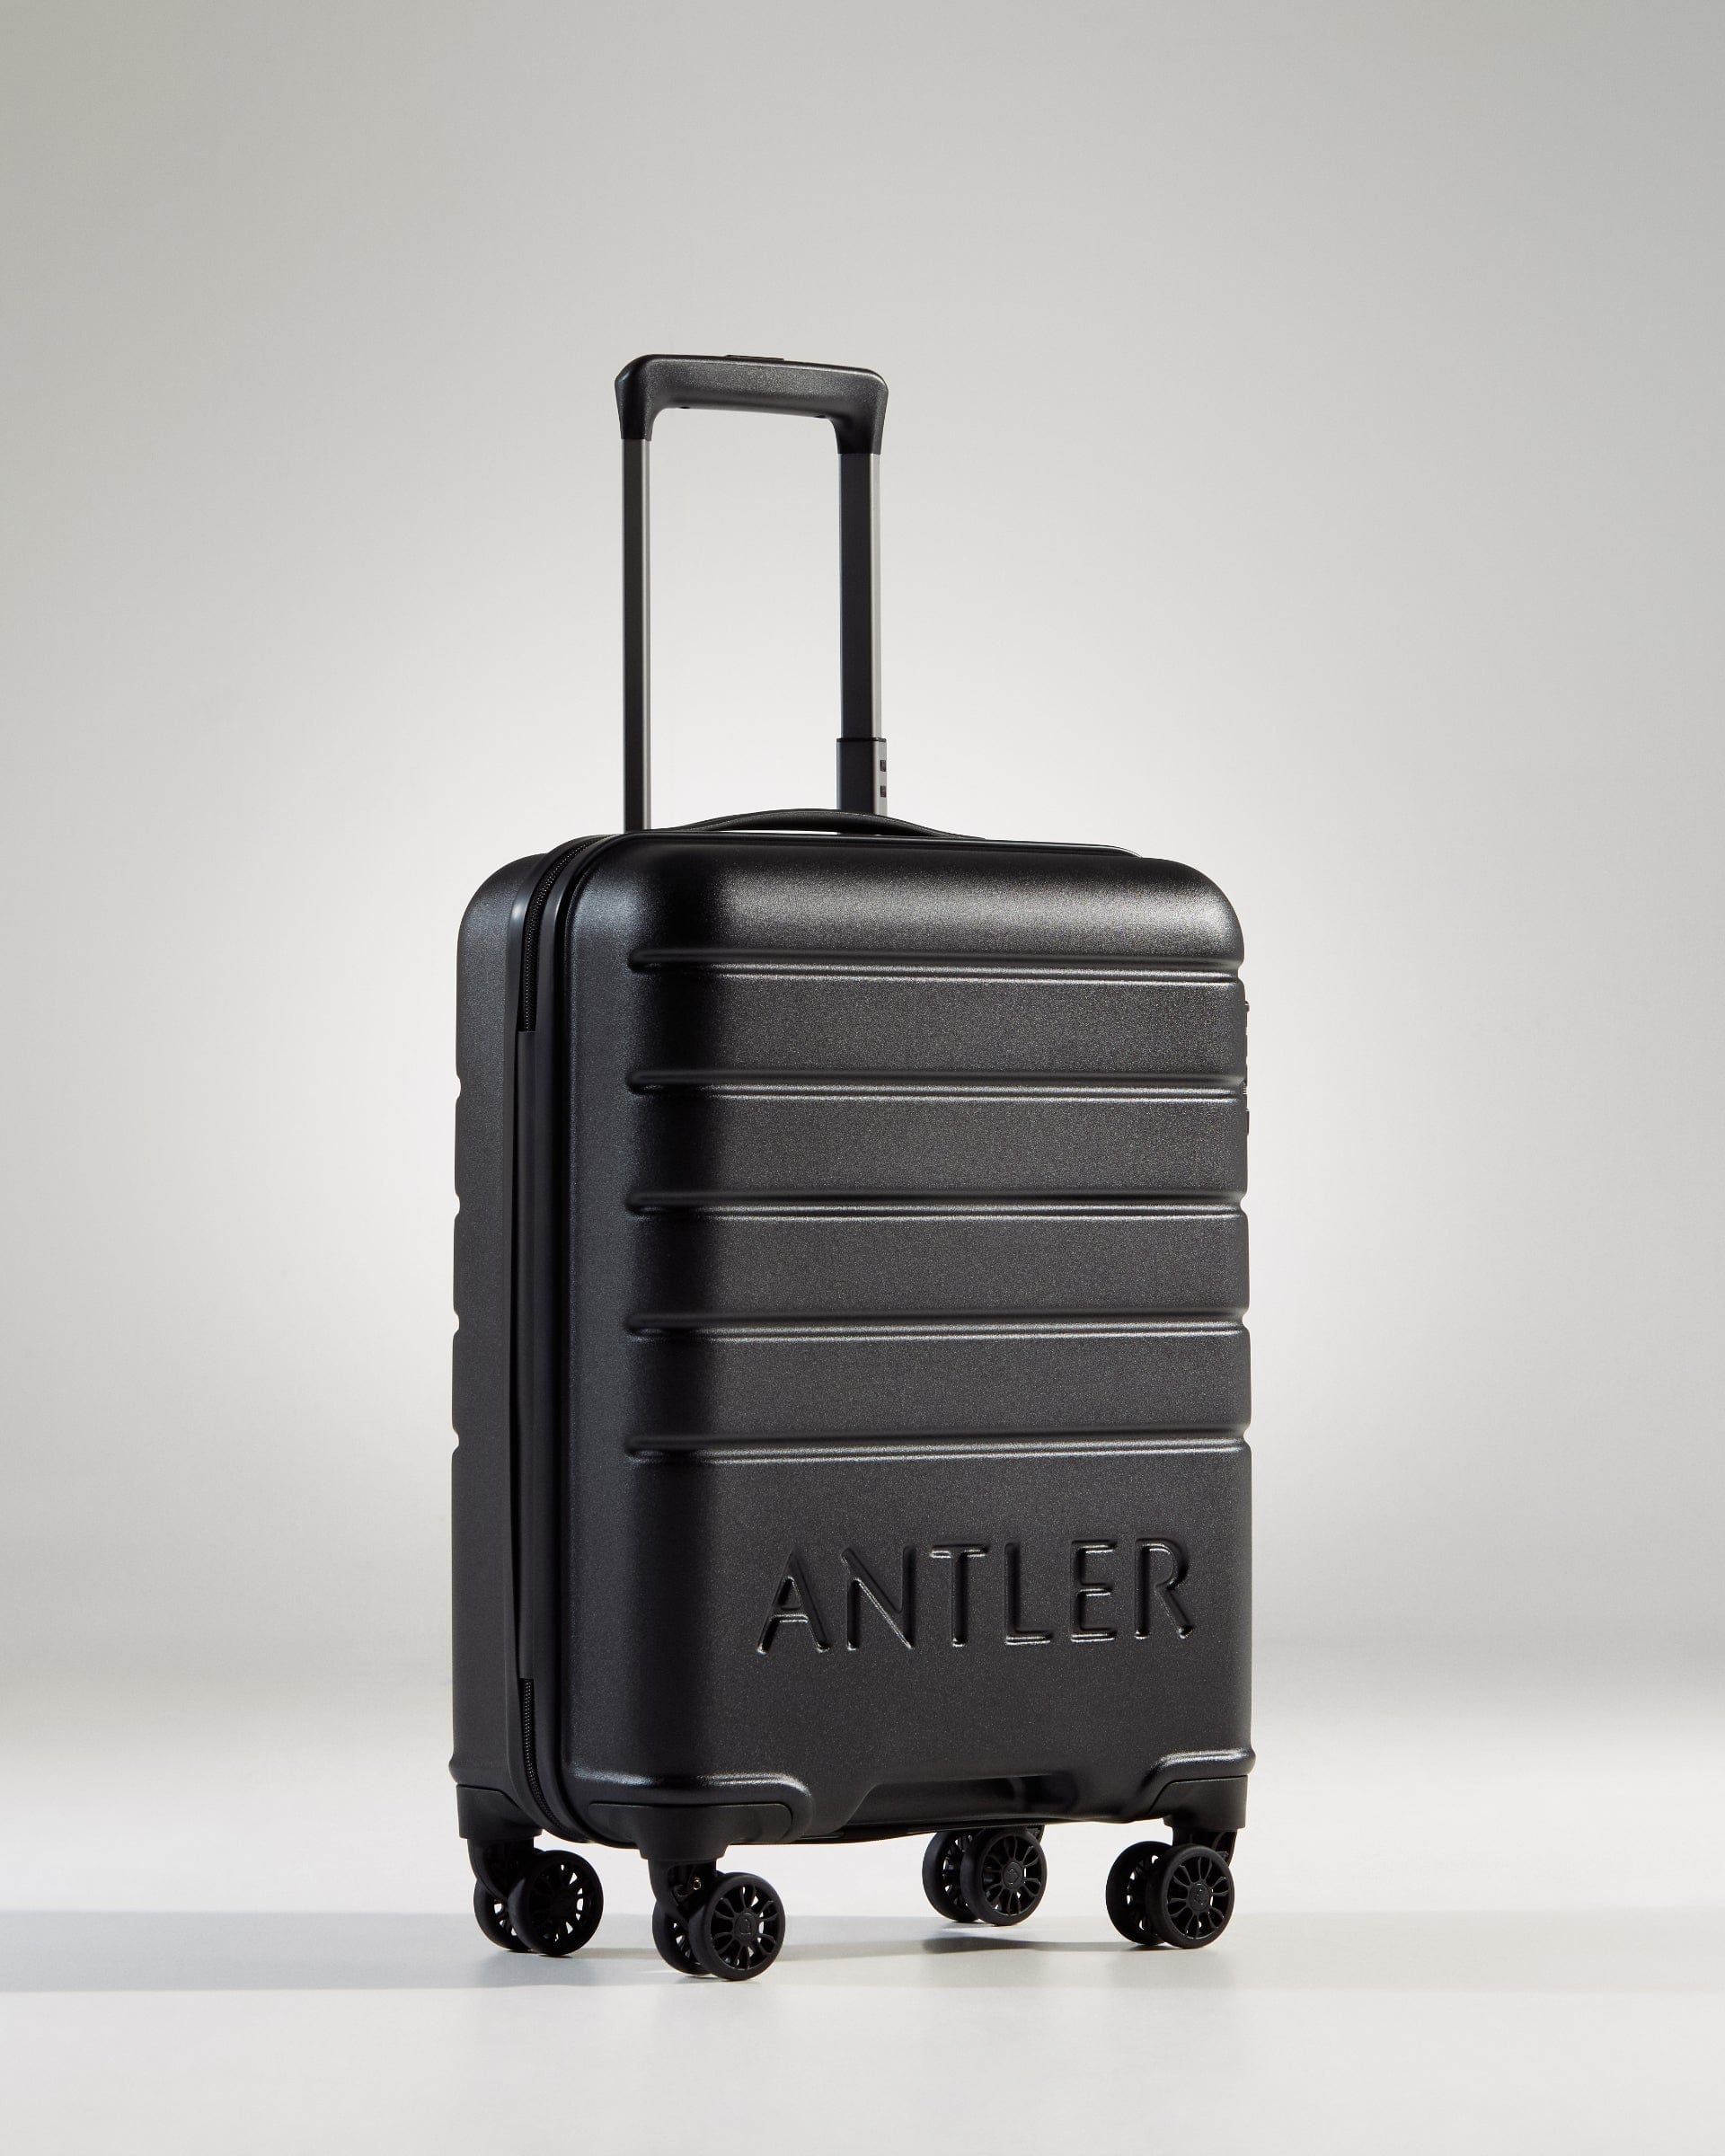 View Antler Logo Cabin Suitcase In Black Size 55 x 40 x 20 cm information